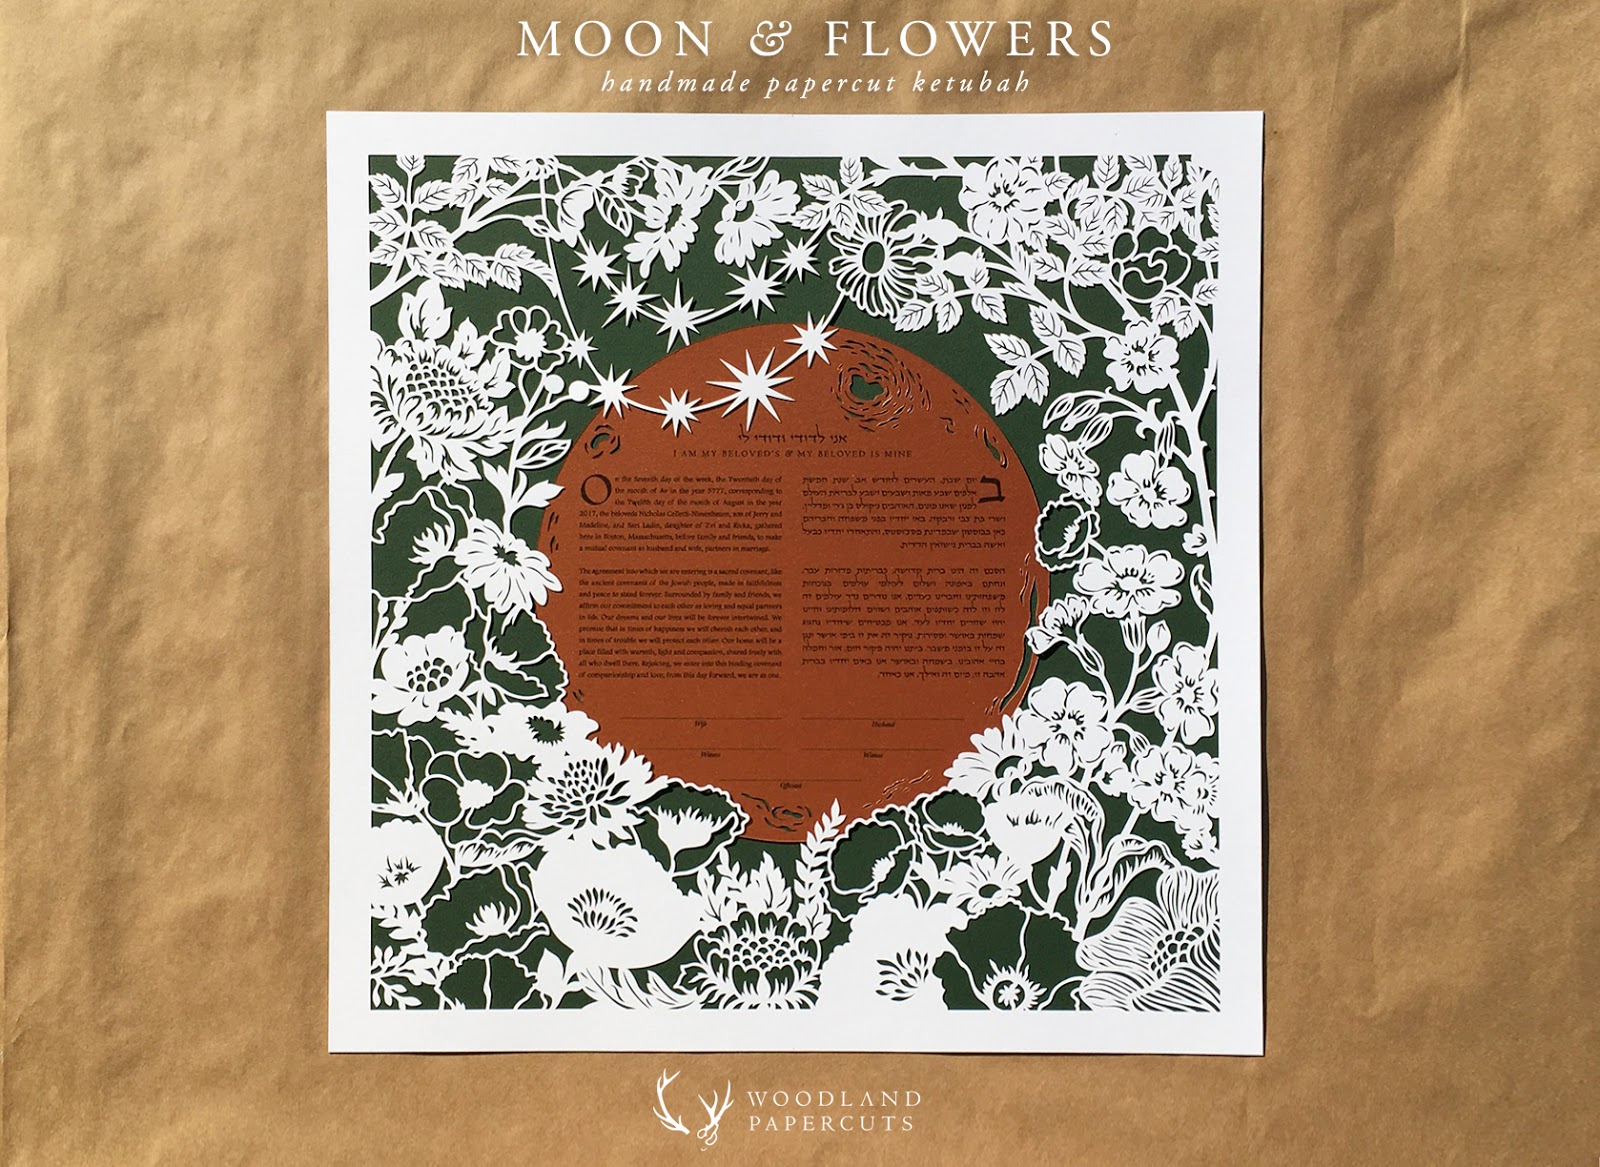 Moon & Flowers papercut ketubah by Woodland Papercuts